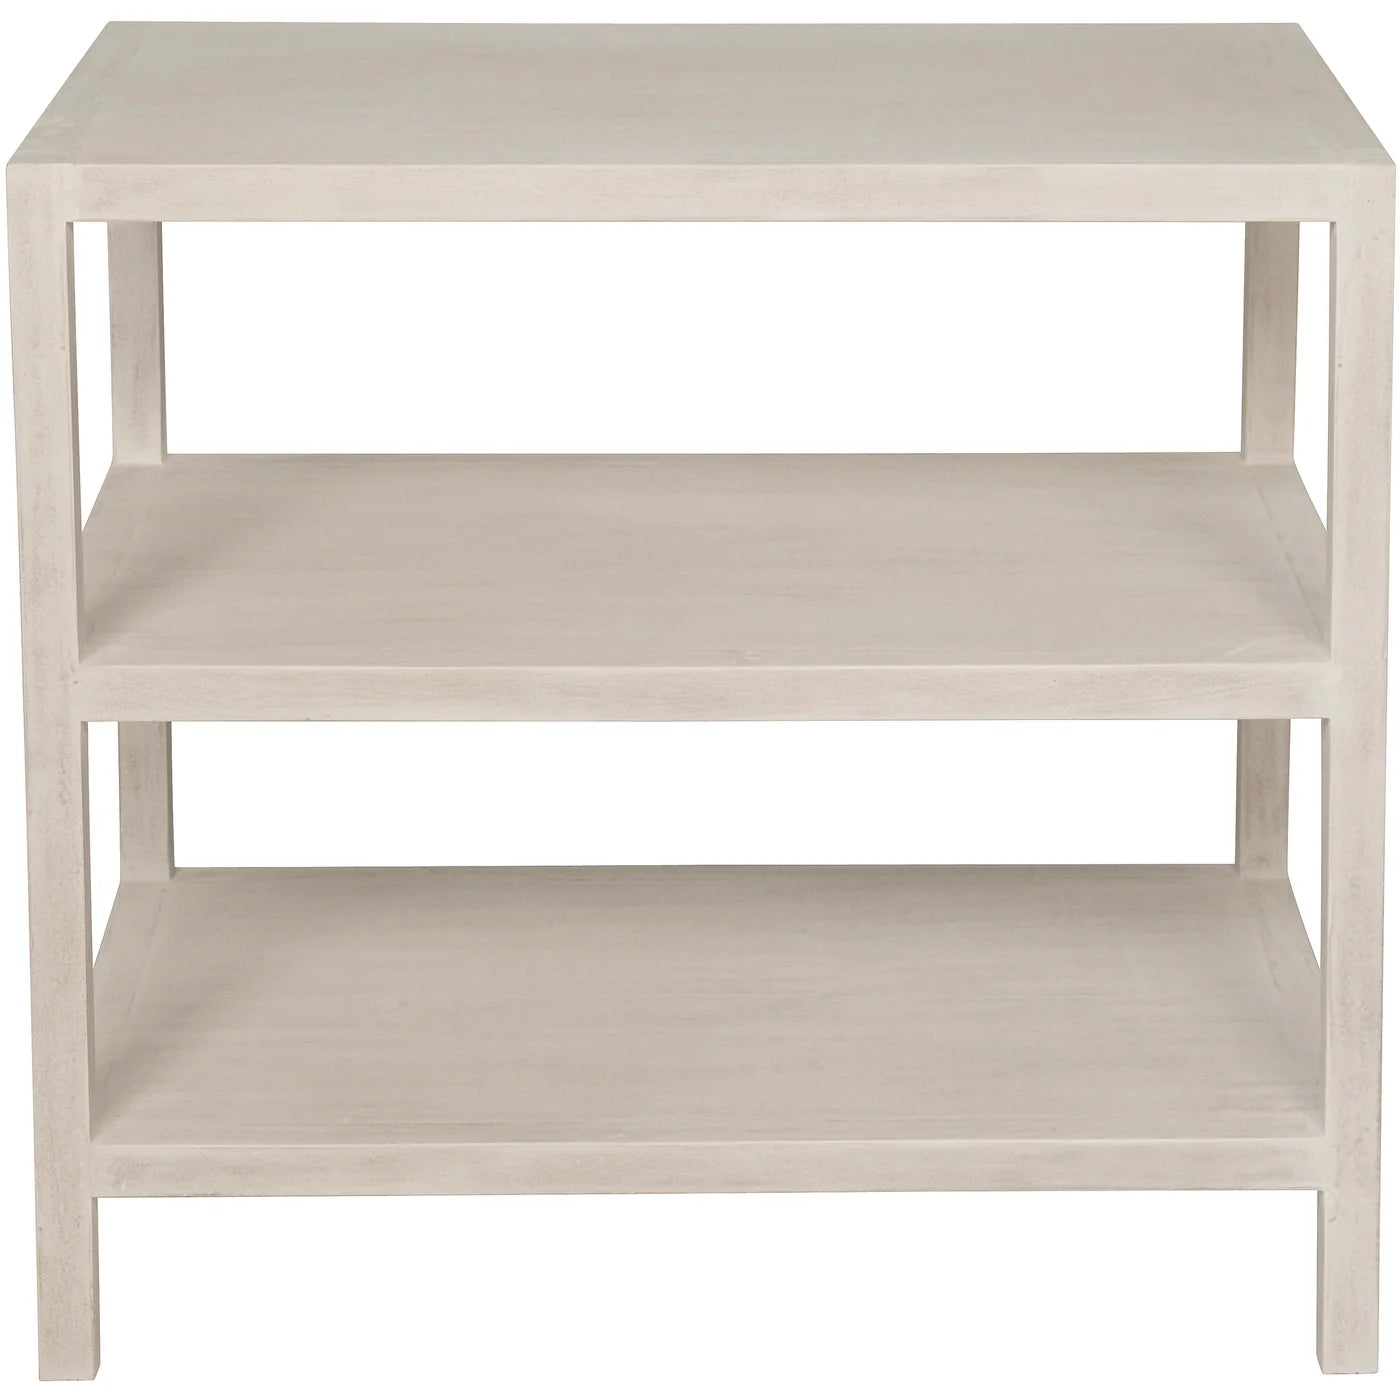 3 shelf table 28x18x26h